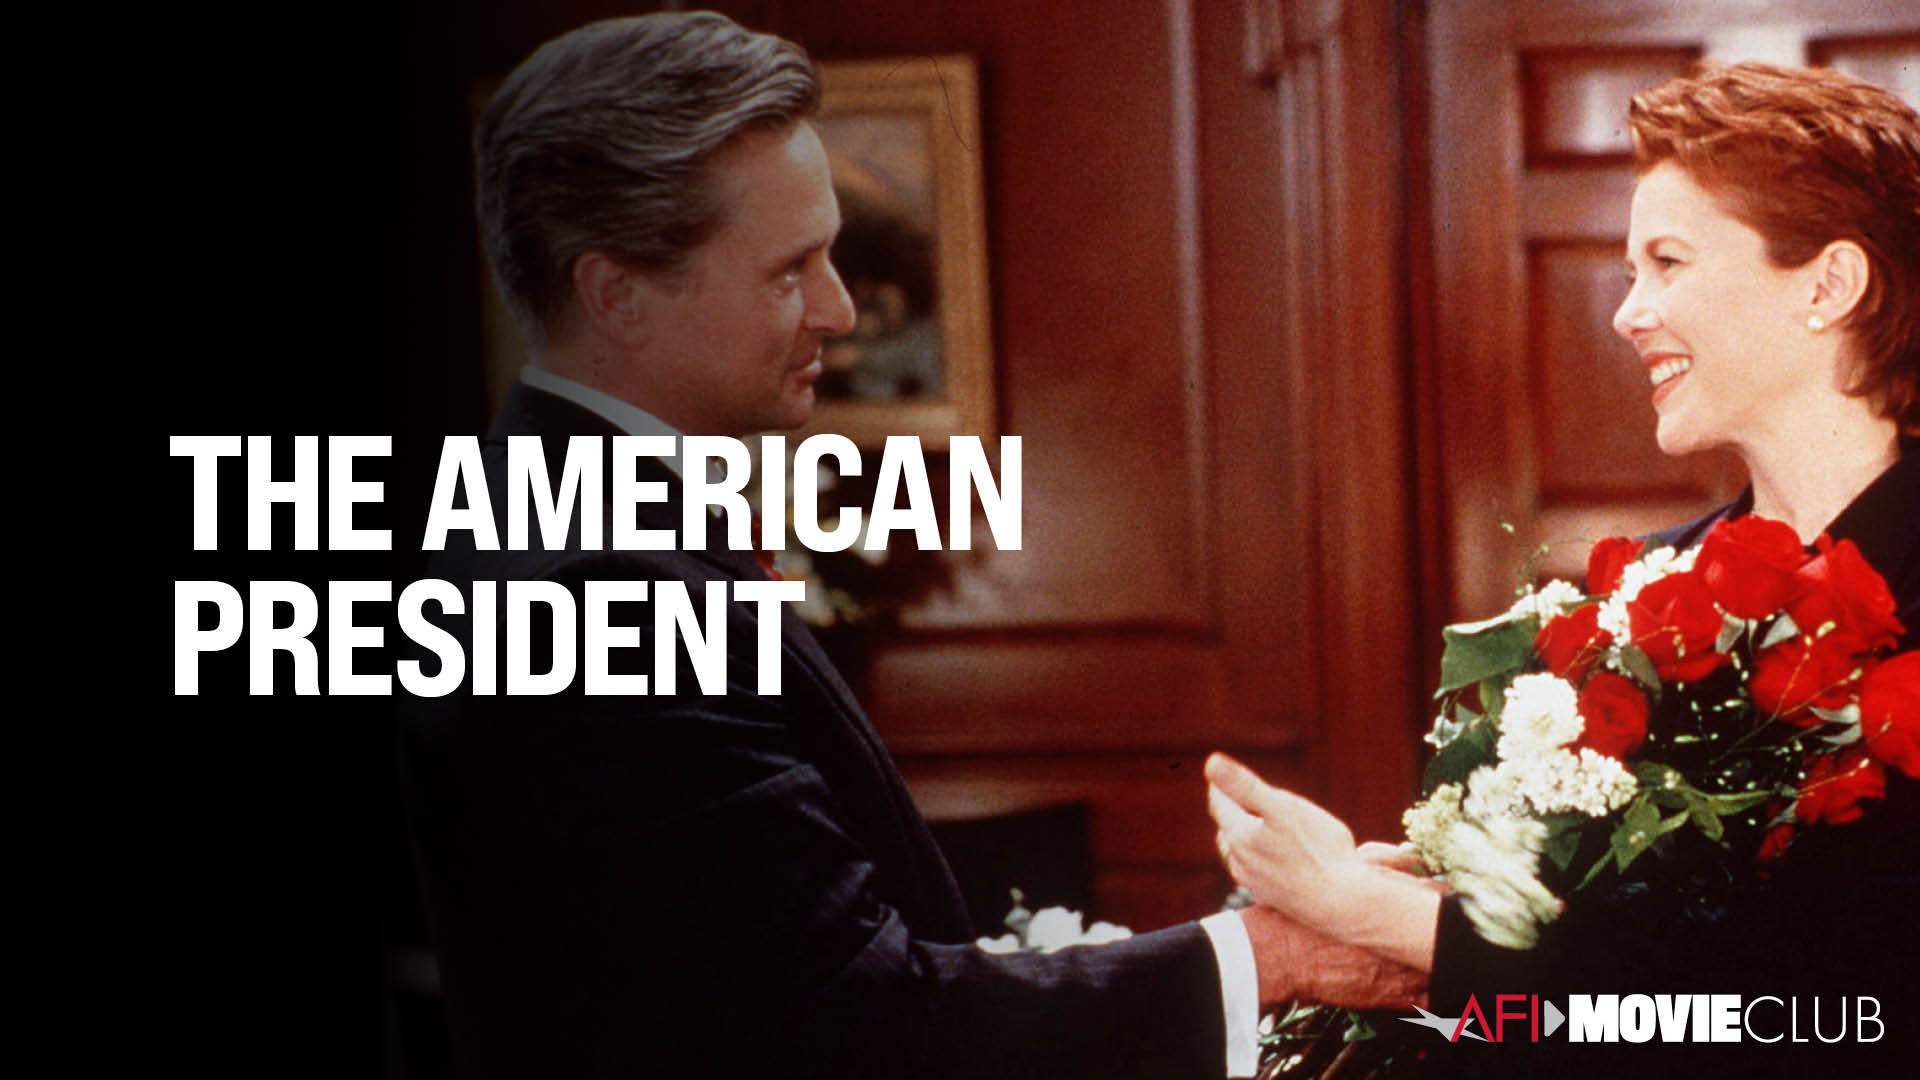 The American President Film Still - Michael Douglas and Annette Bening